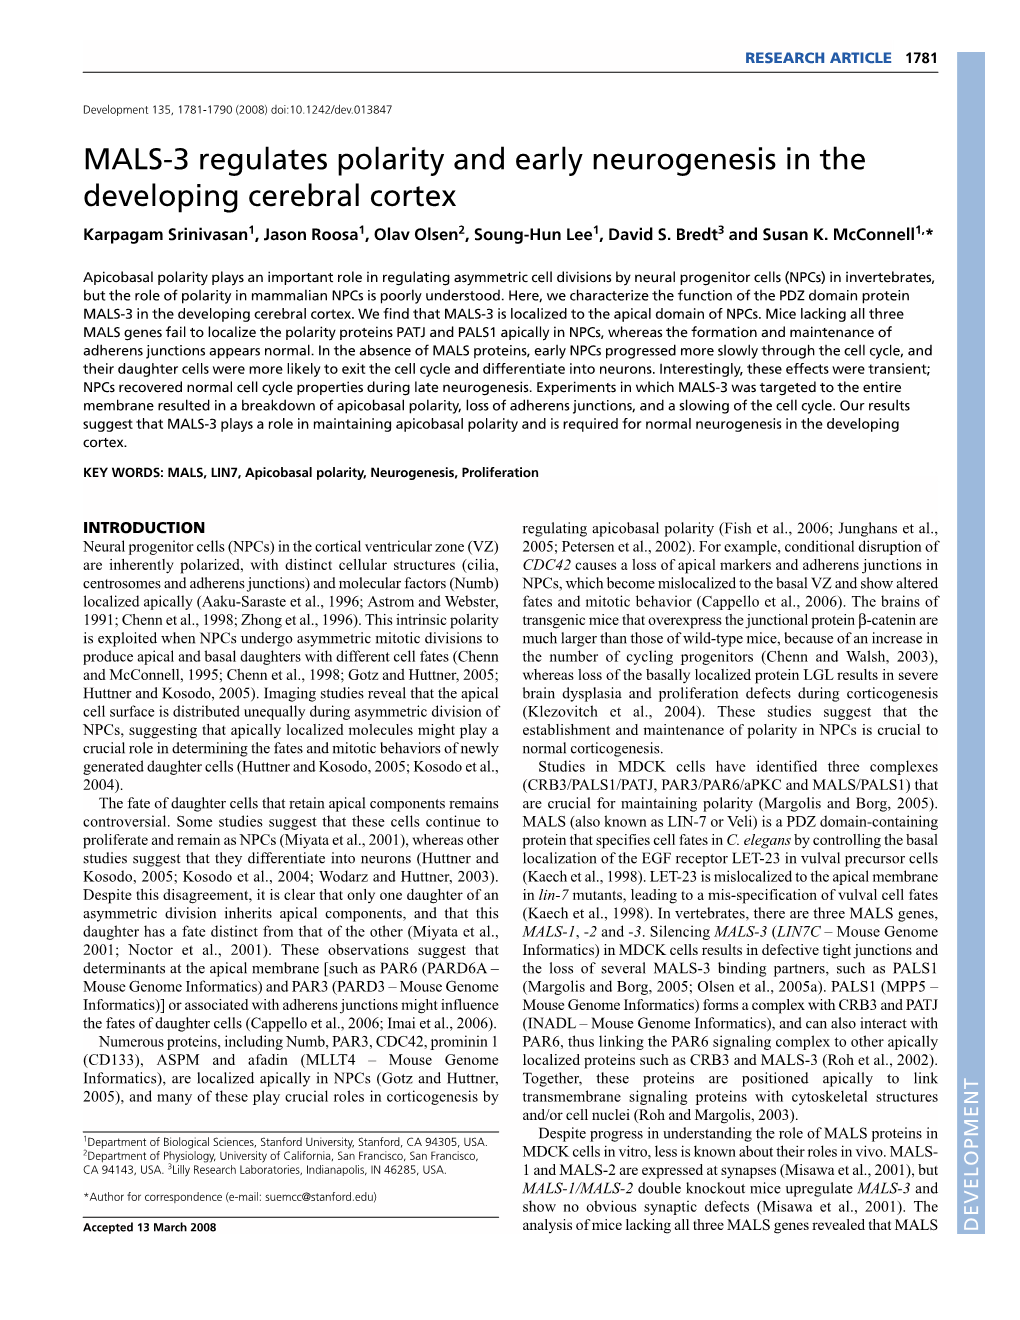 MALS-3 Regulates Polarity and Early Neurogenesis in the Developing Cerebral Cortex Karpagam Srinivasan1, Jason Roosa1, Olav Olsen2, Soung-Hun Lee1, David S